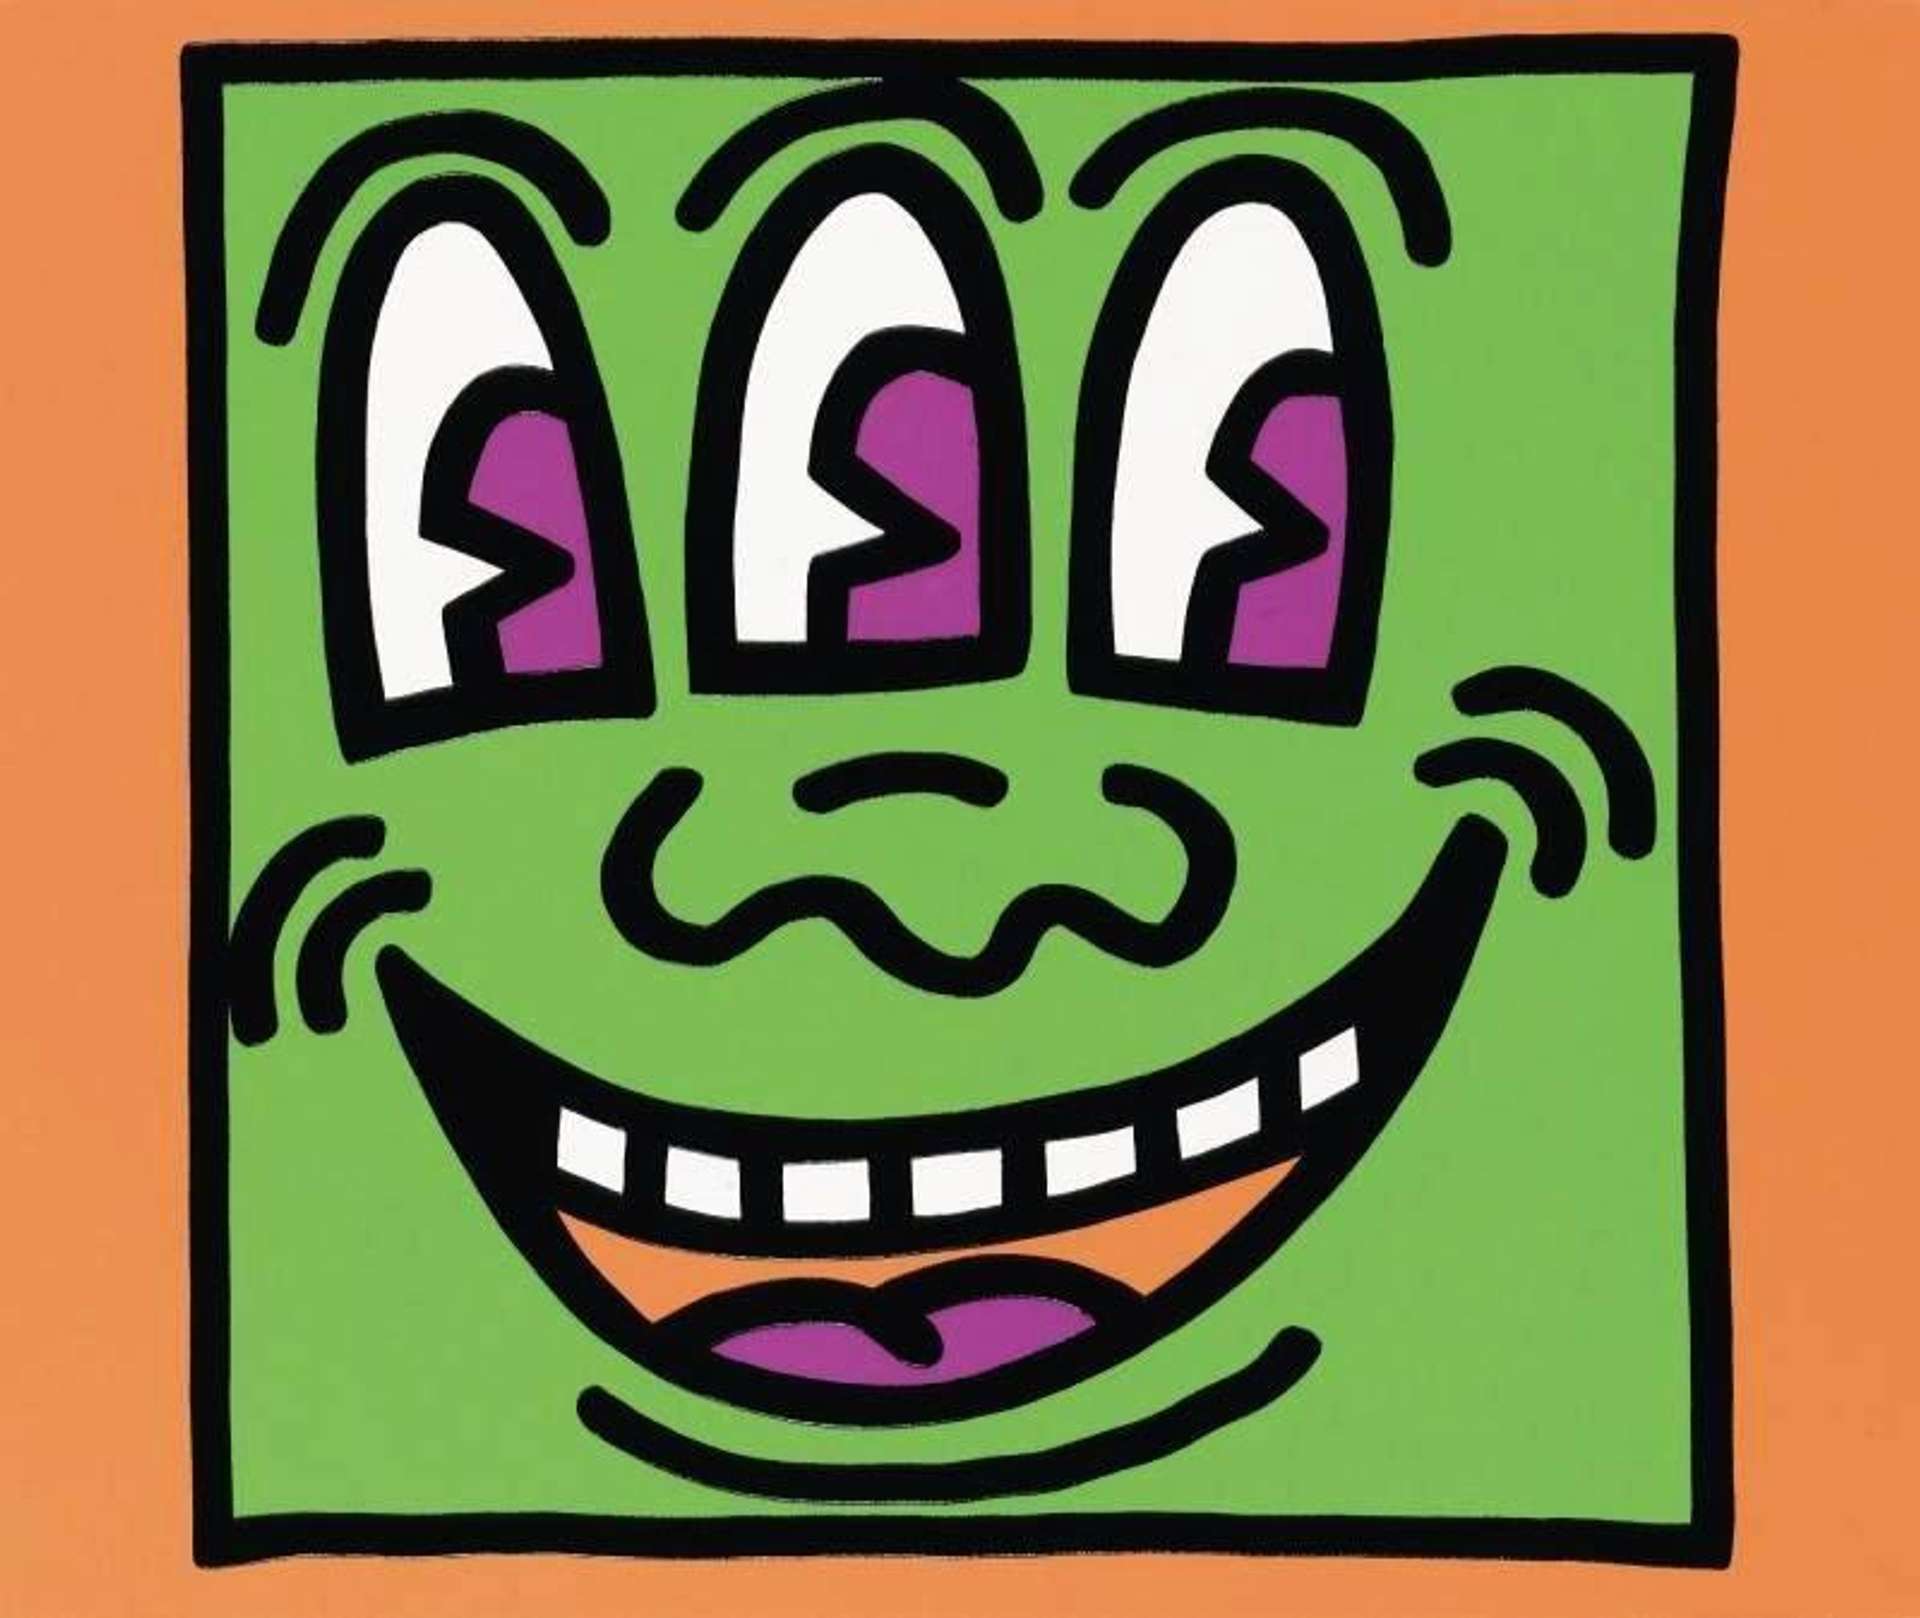 Three Eyed Monster - Signed Print by Keith Haring 1990 - MyArtBroker